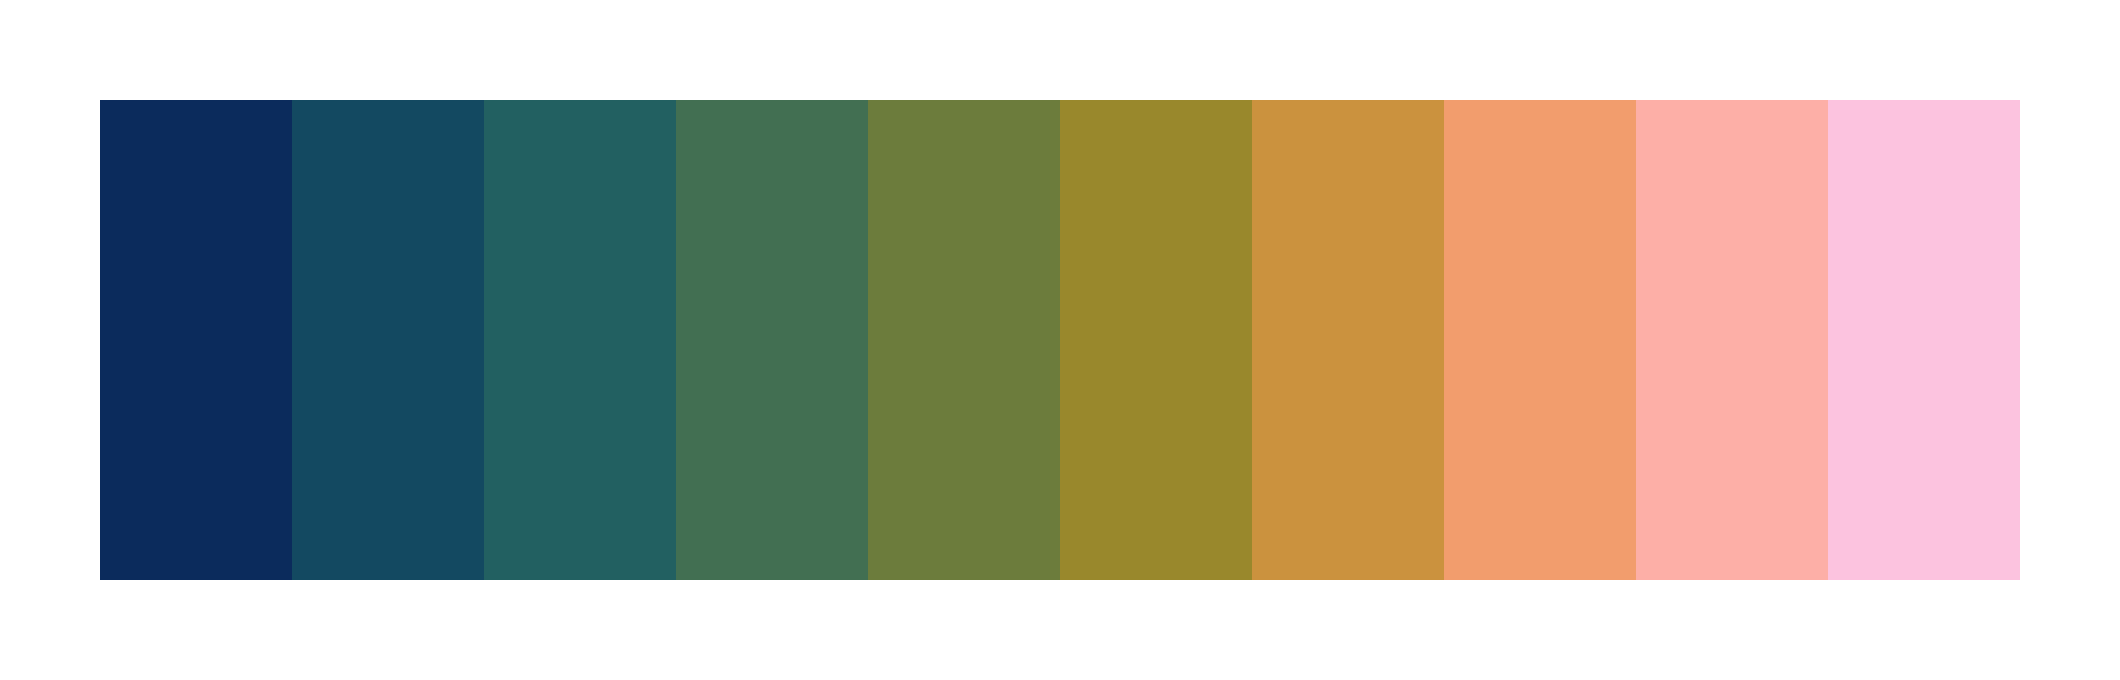 batlow10 discrete scientific color palette by Fabio Crameri